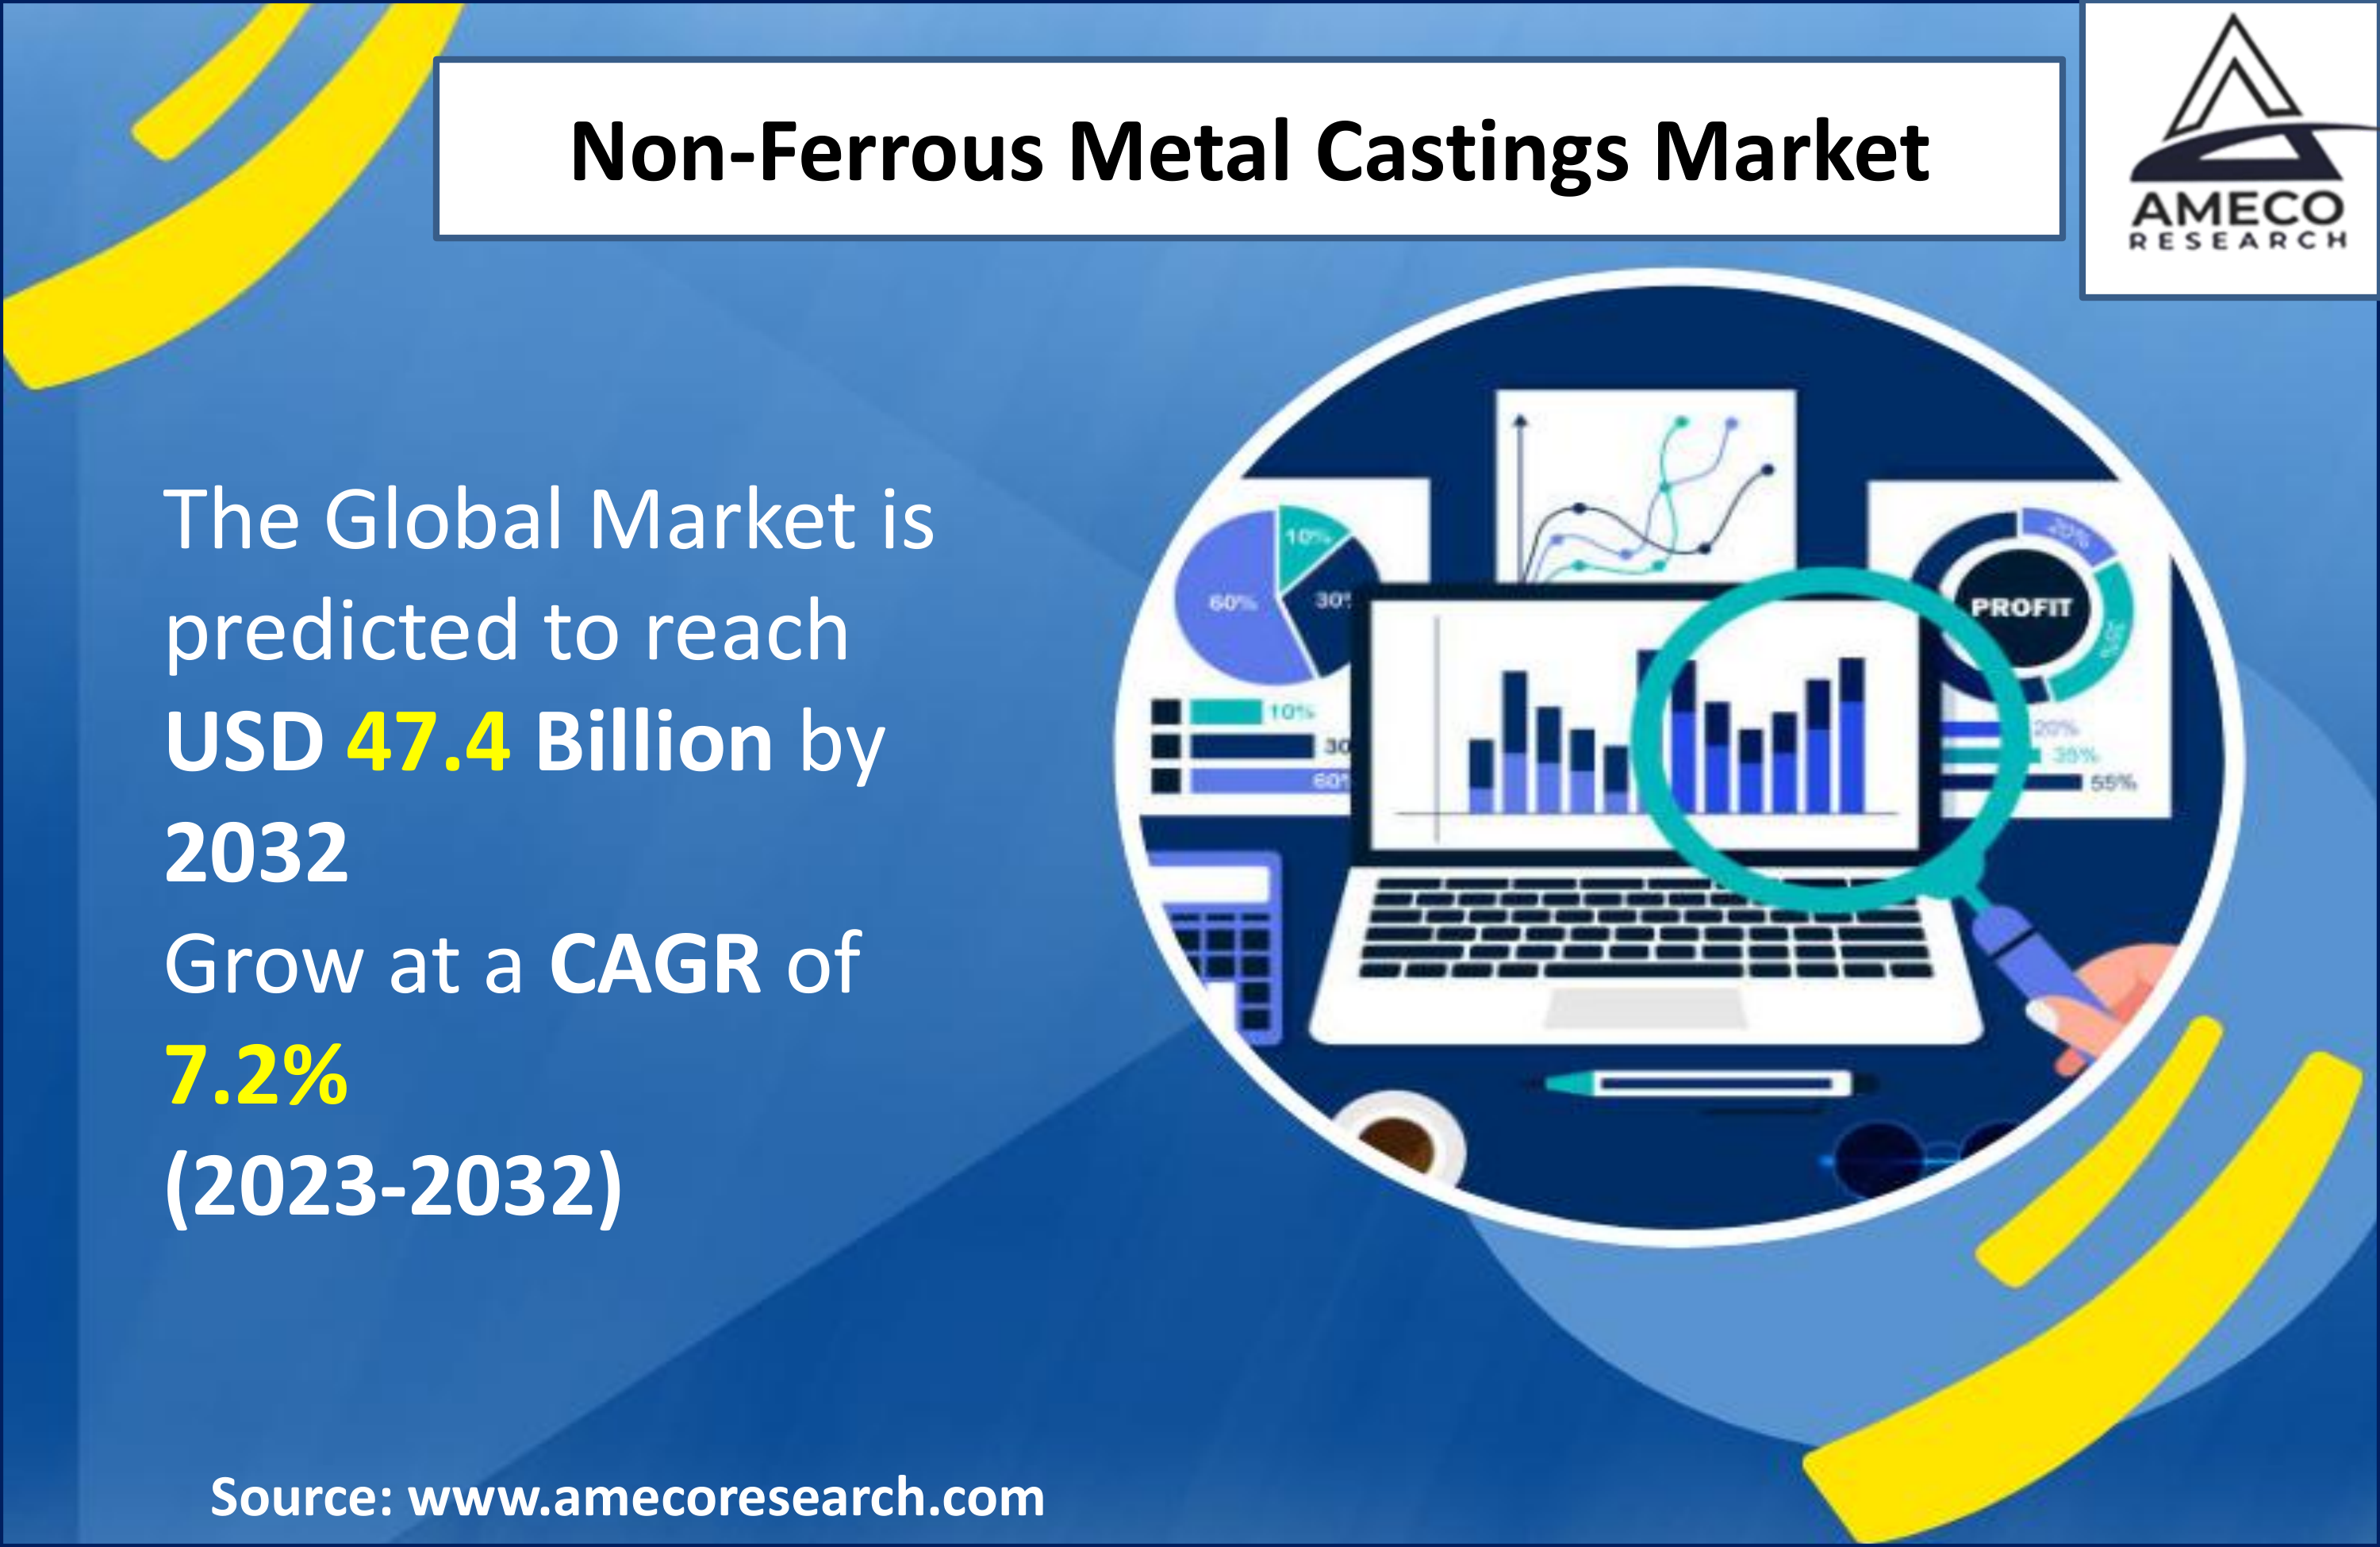 Non-Ferrous Metal Castings Market